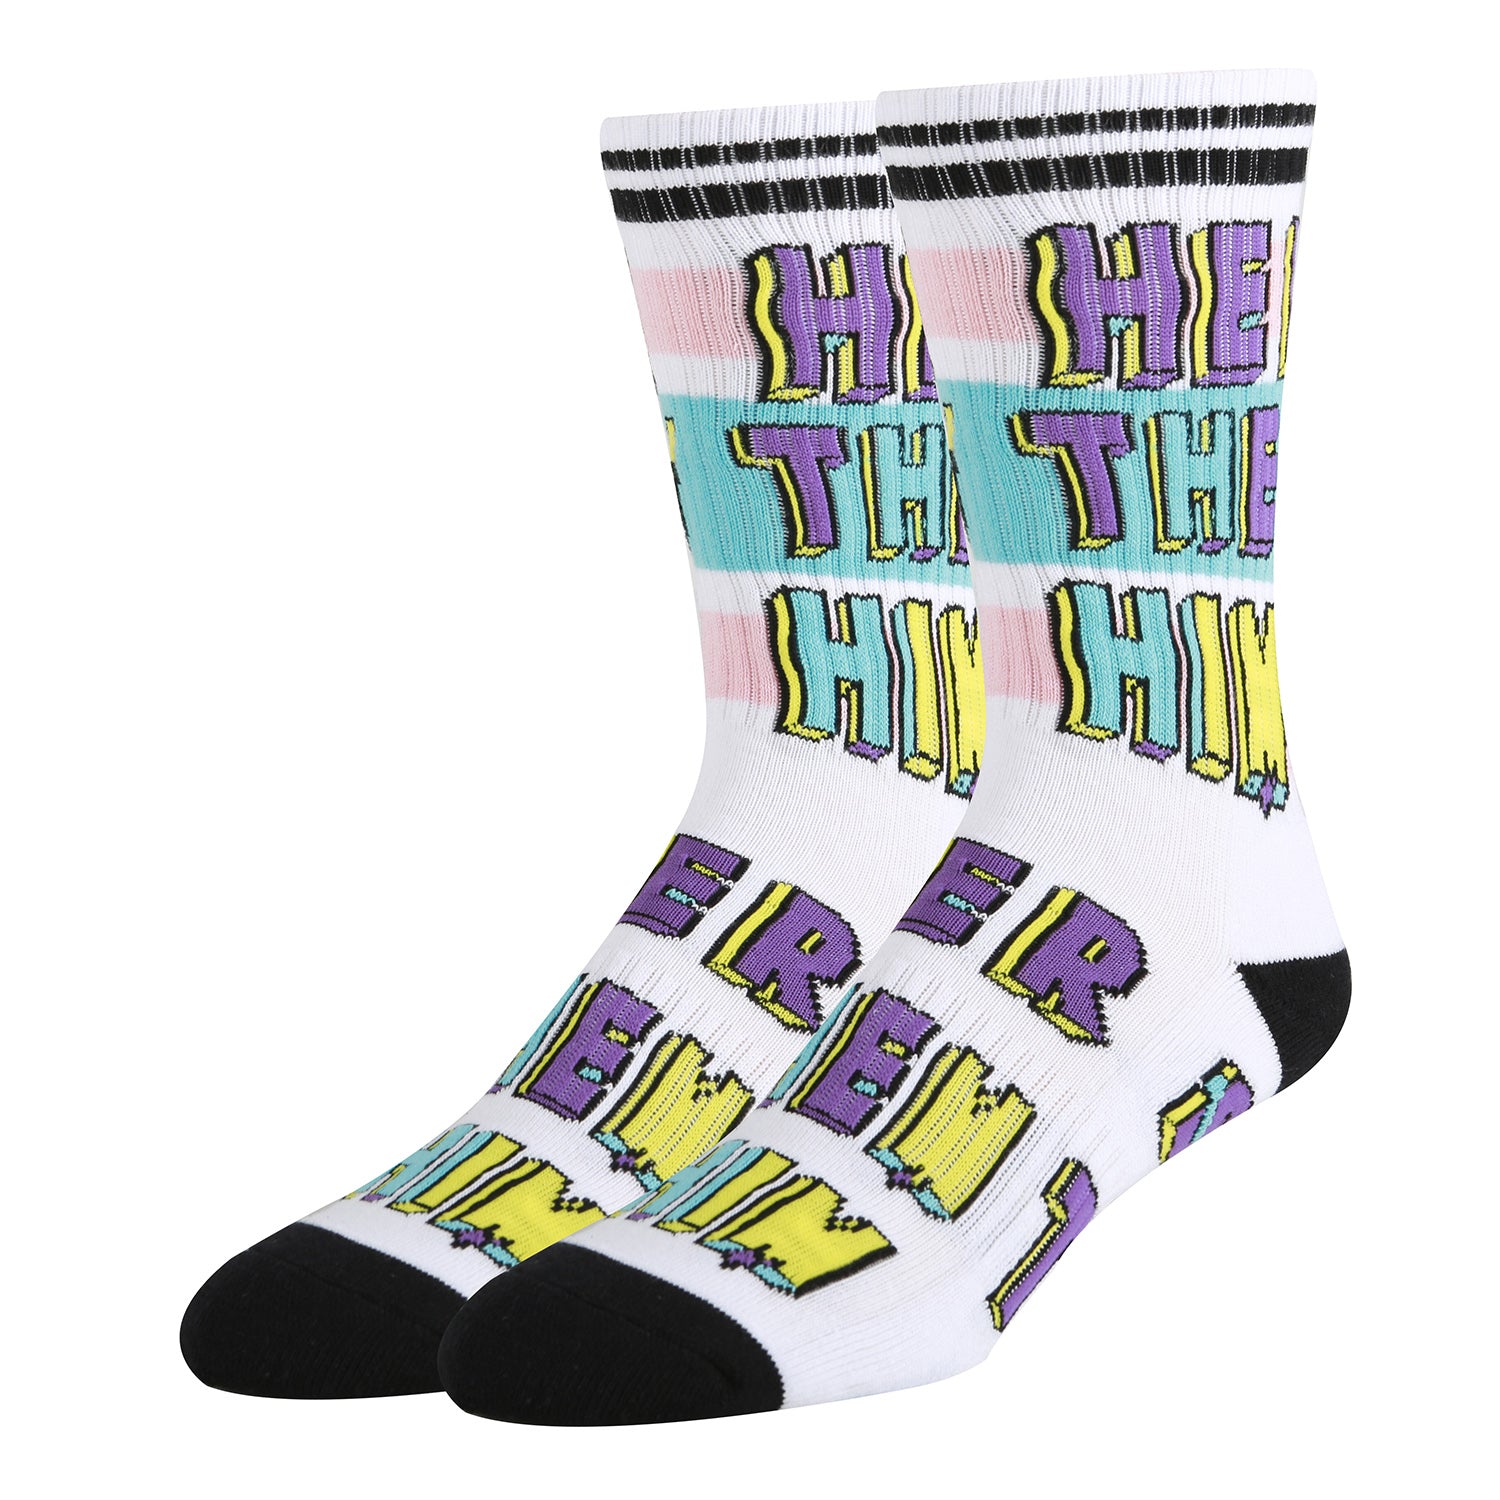 Them They Socks | Novelty Crew Socks For Men